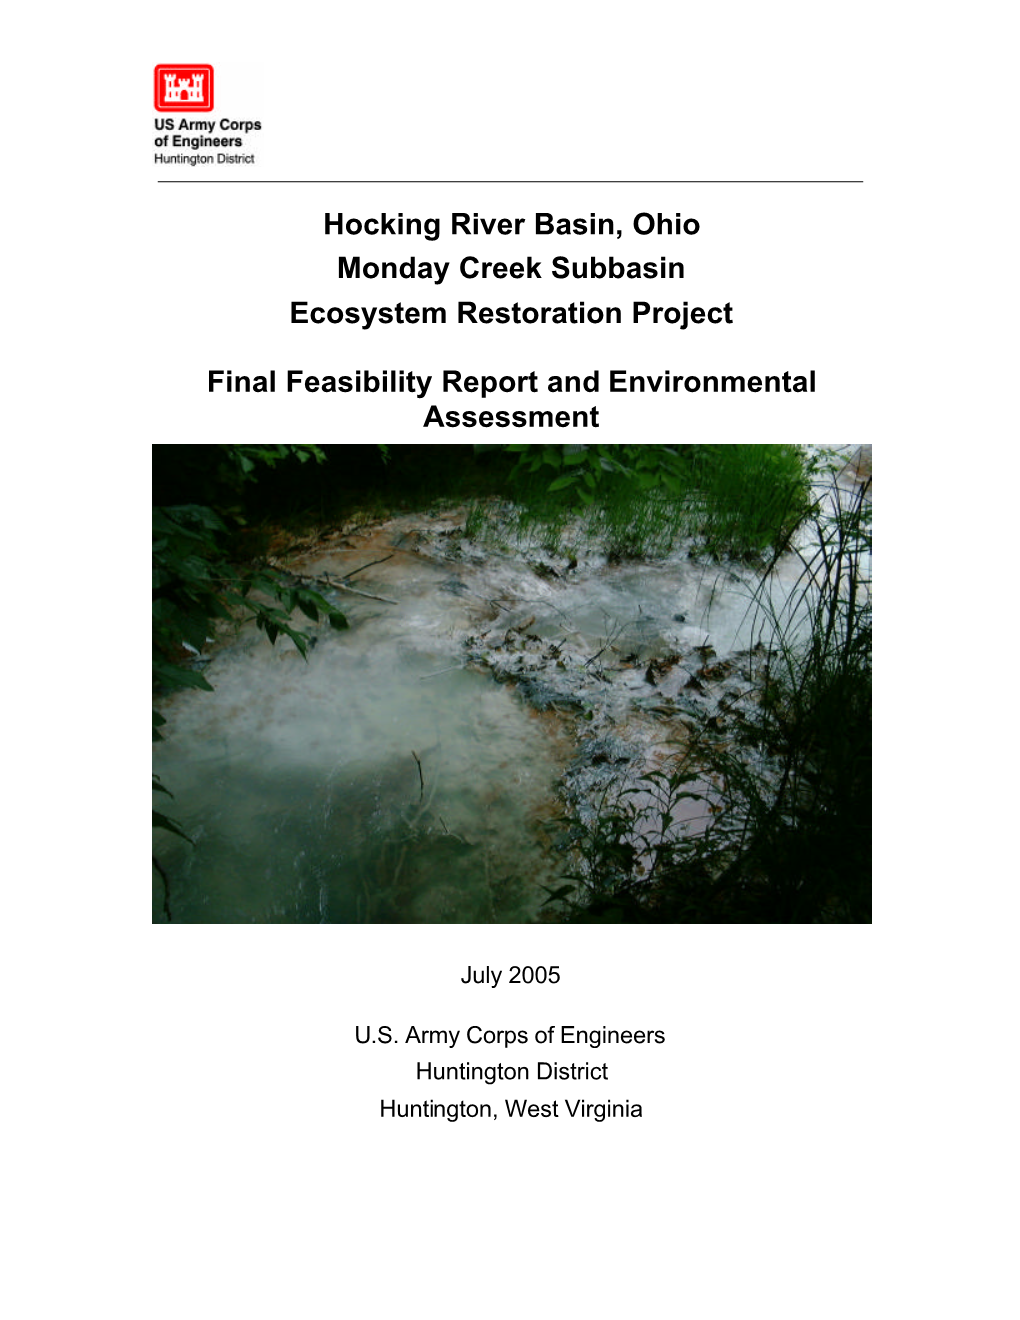 Hocking River Basin, Ohio Monday Creek Subbasin Ecosystem Restoration Project